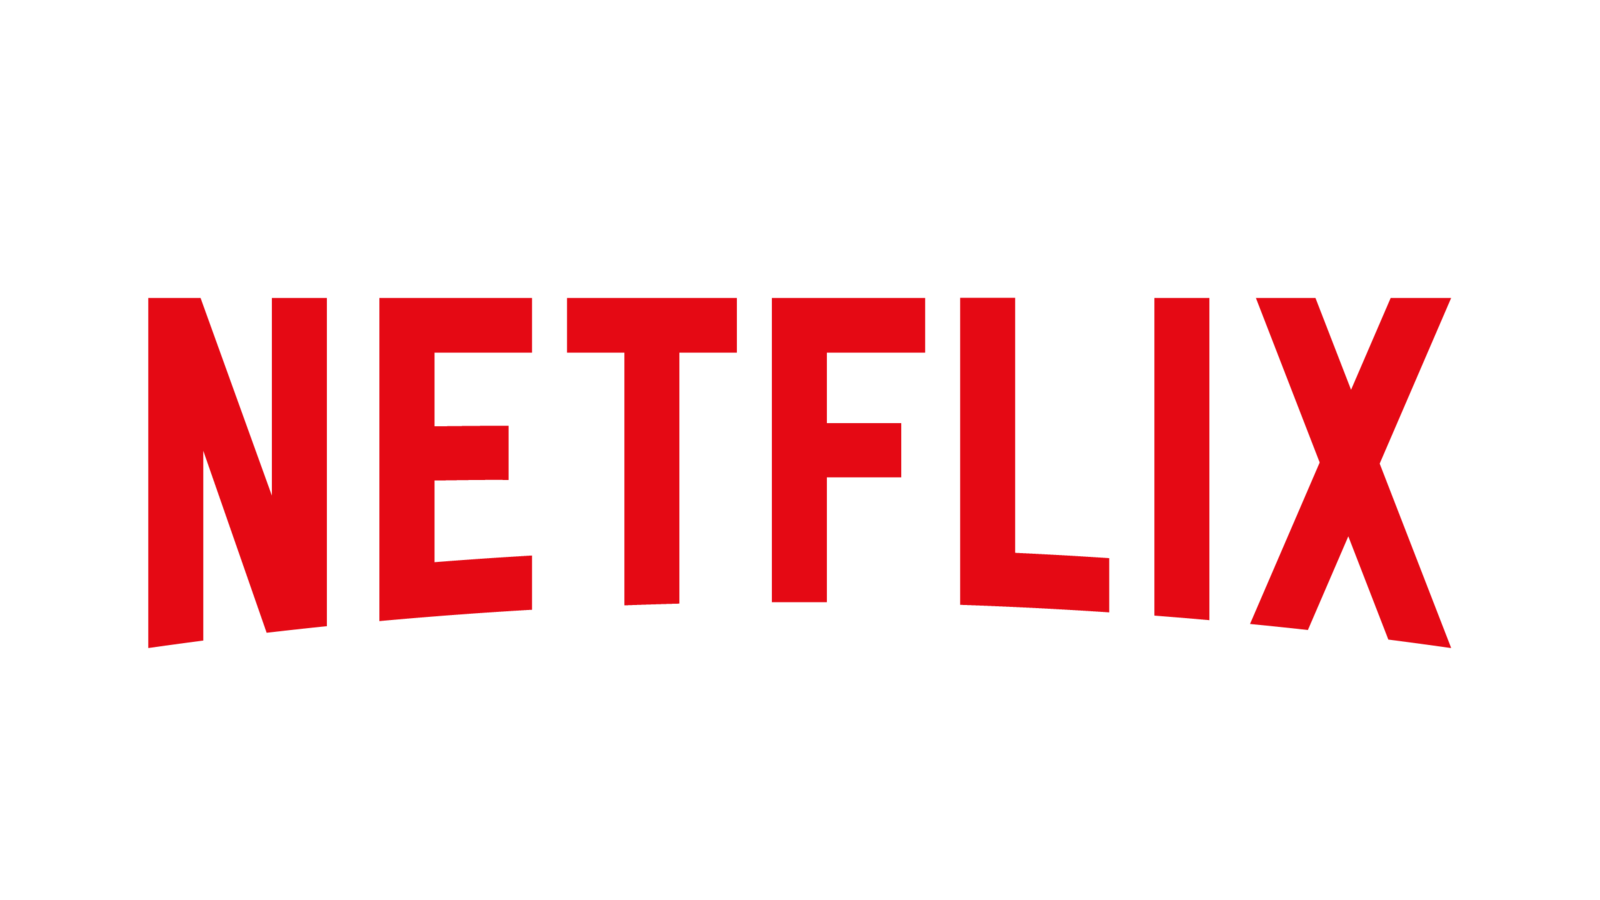 No Netflix in Indonesia